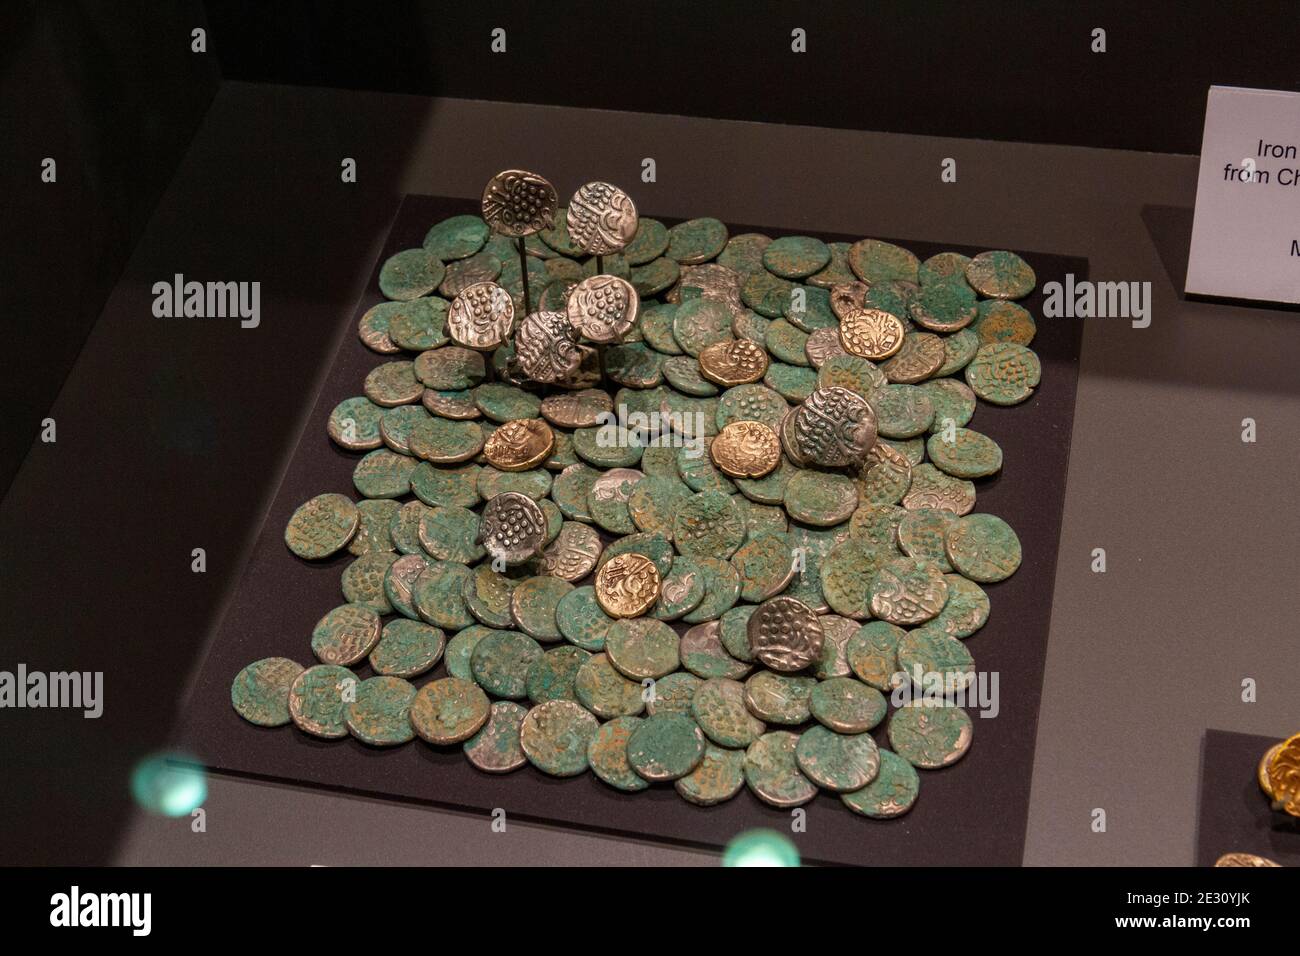 The Tisbury Iron Age Stater Hoard of coins in The Salisbury Museum, Salisbury, Wiltshire, UK. Stock Photo